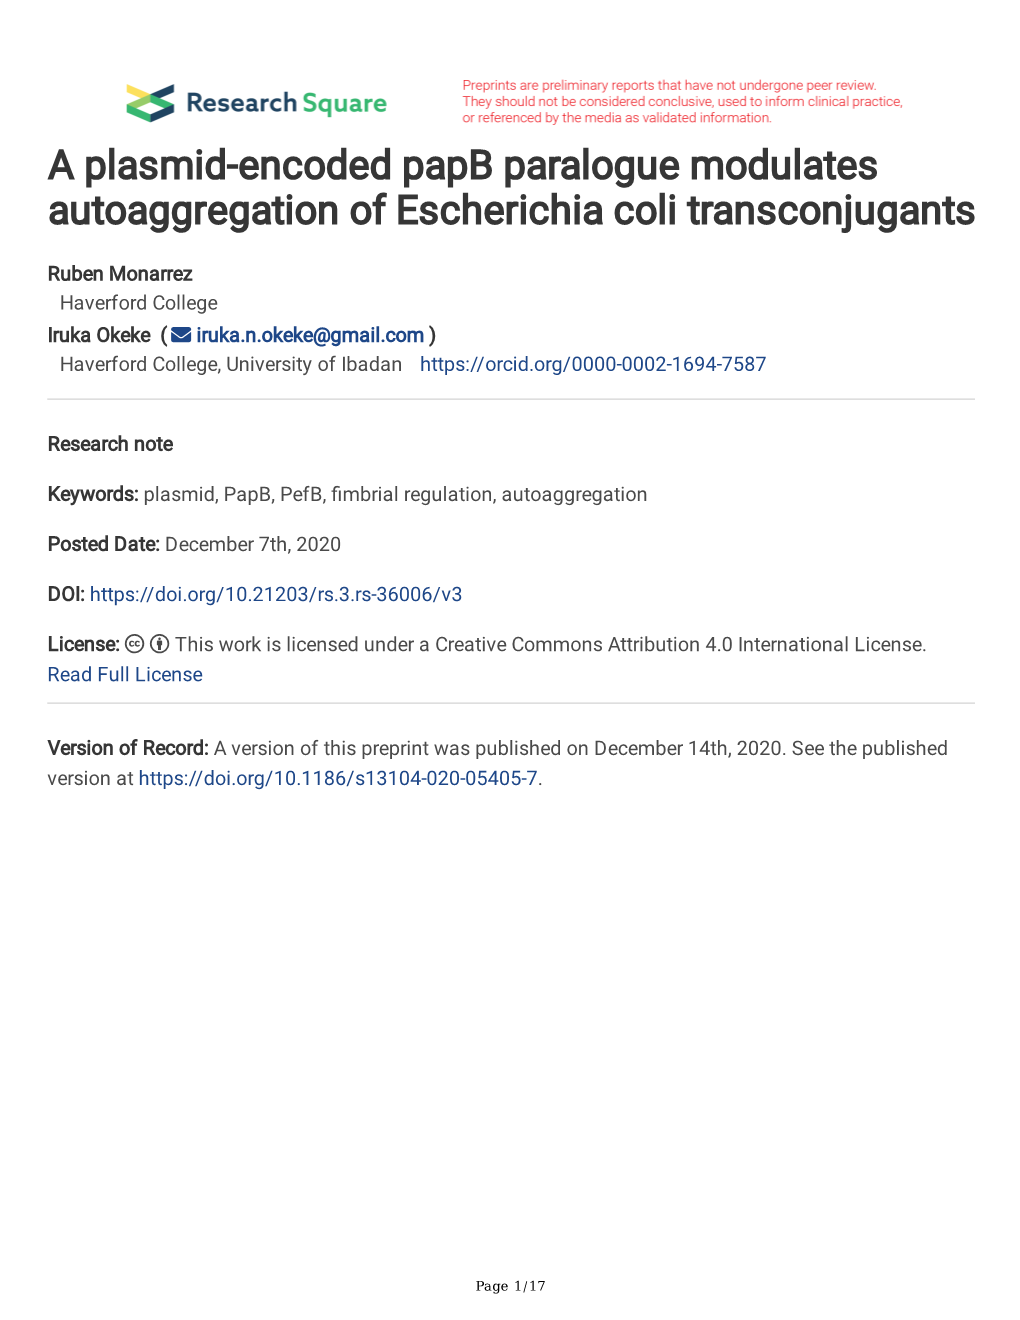 A Plasmid-Encoded Papb Paralogue Modulates Autoaggregation of Escherichia Coli Transconjugants